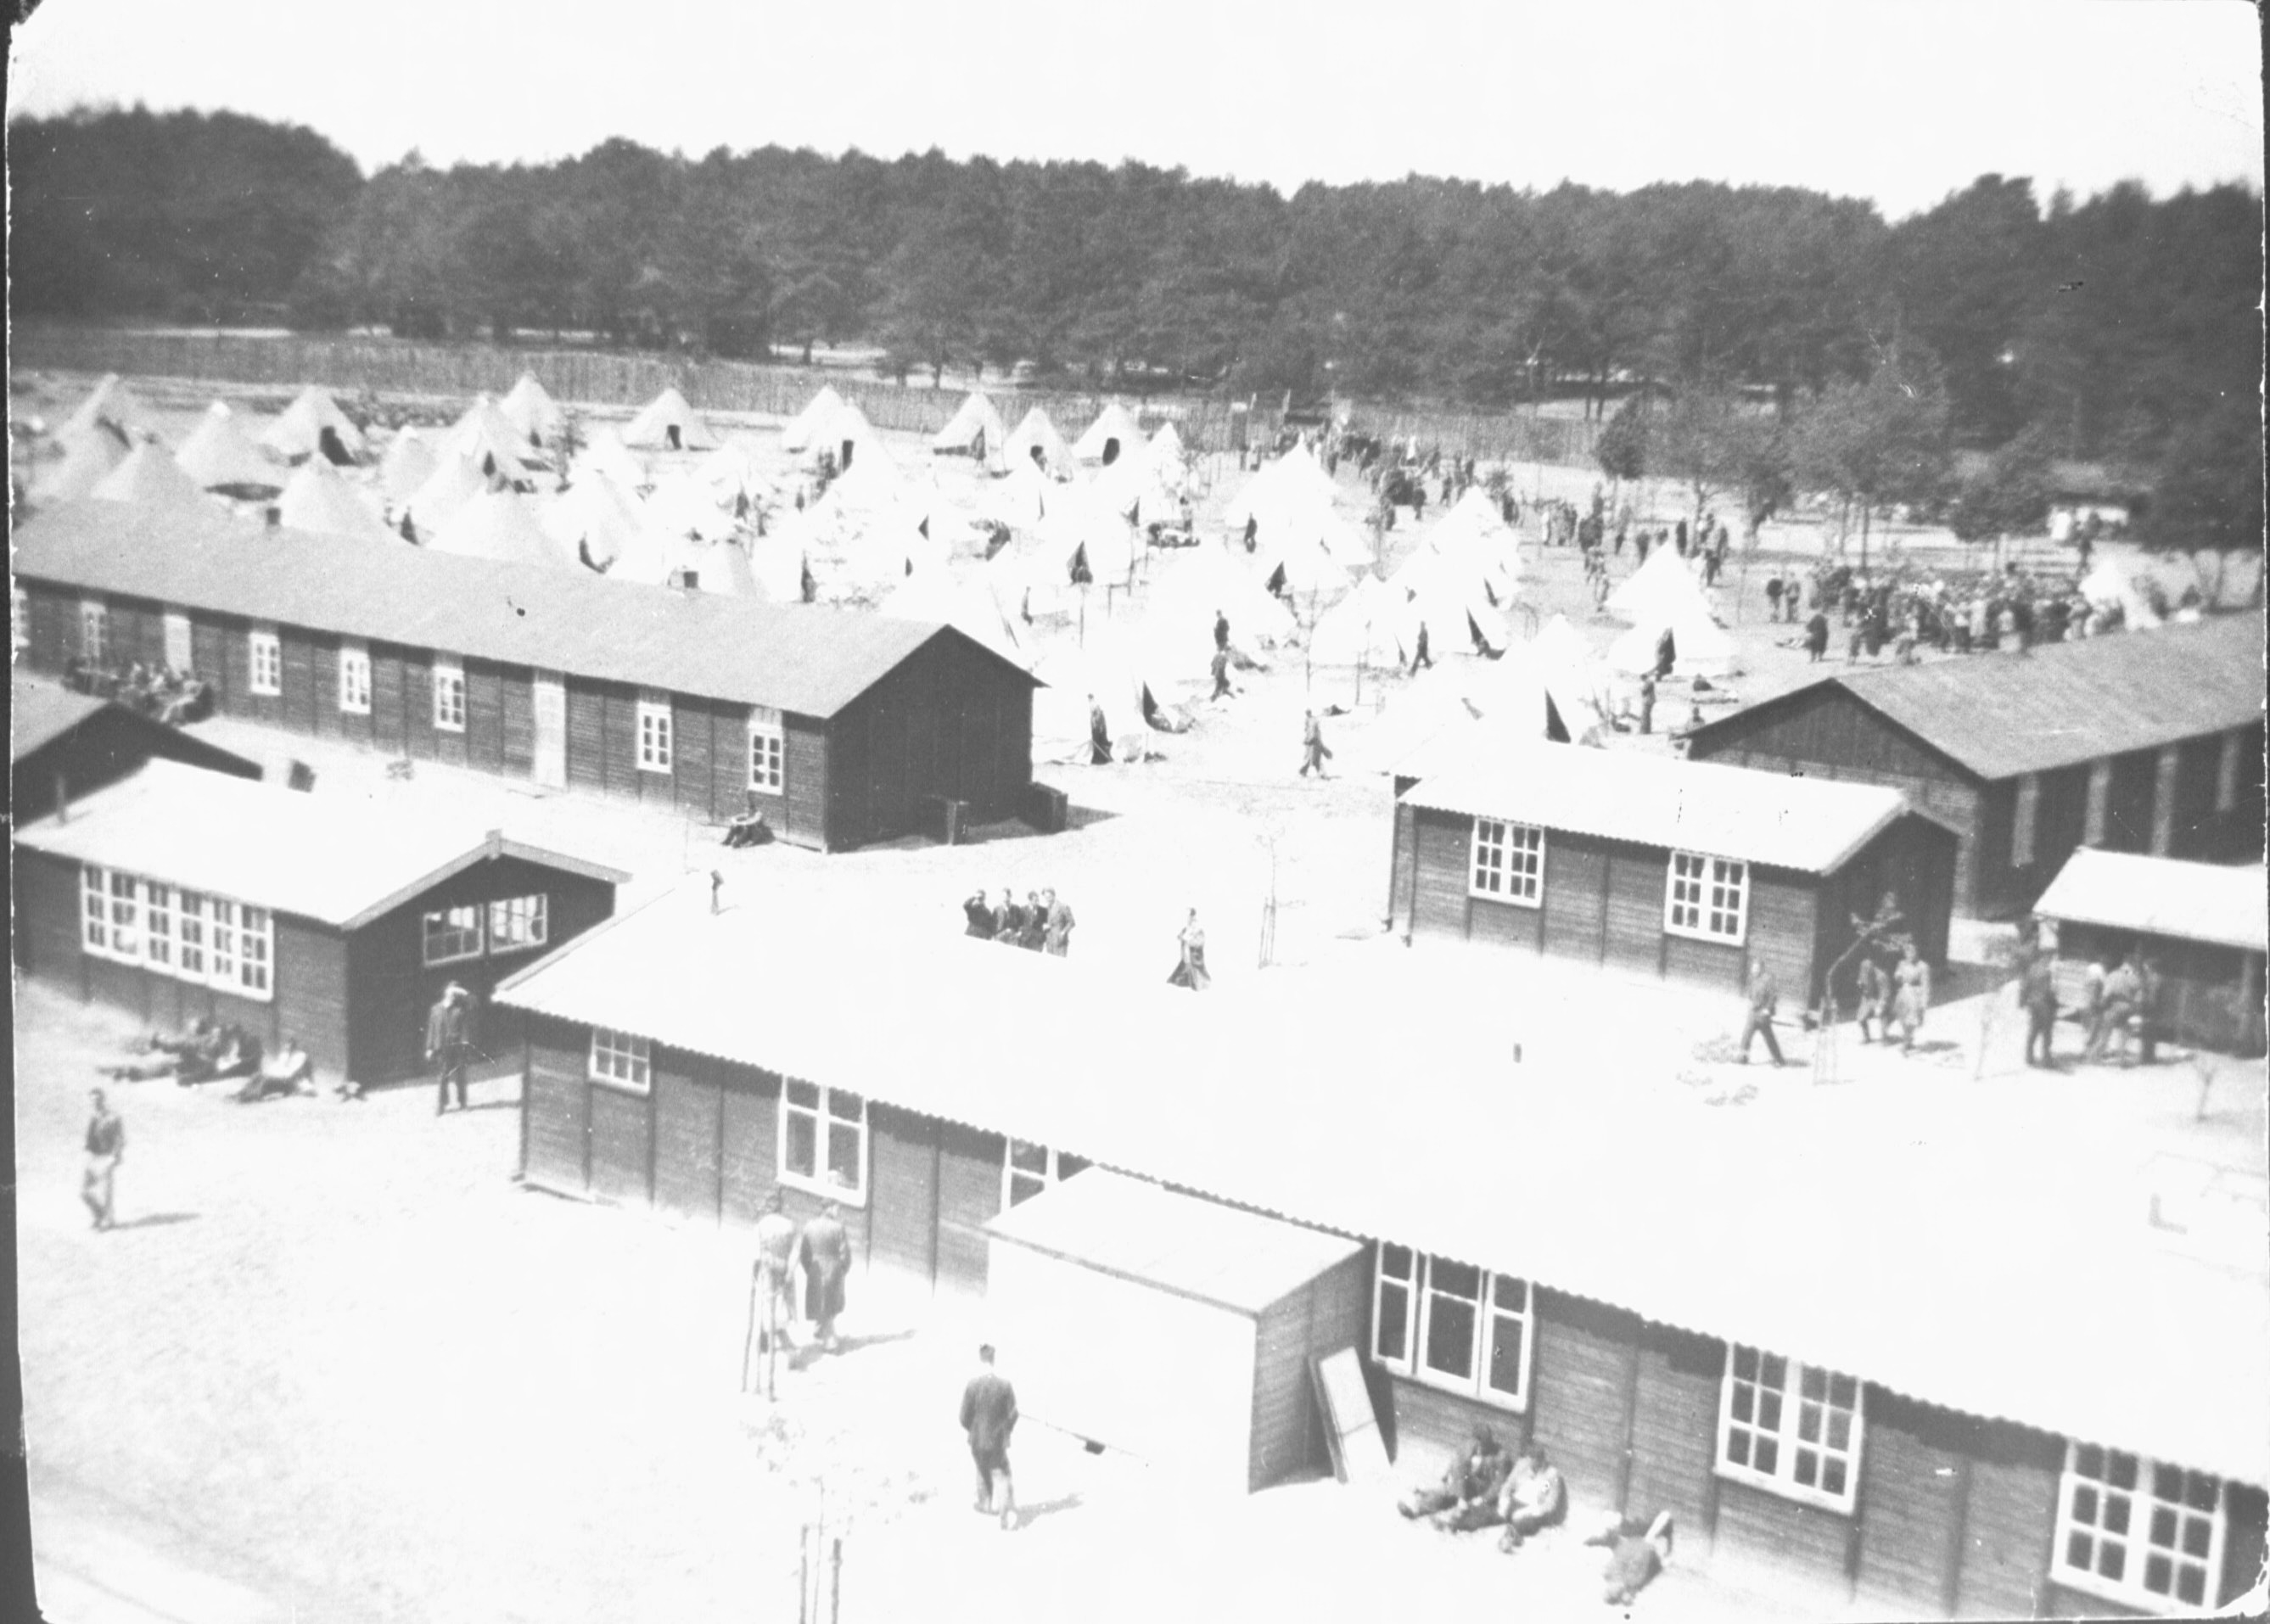 Kamp Erika in 1943